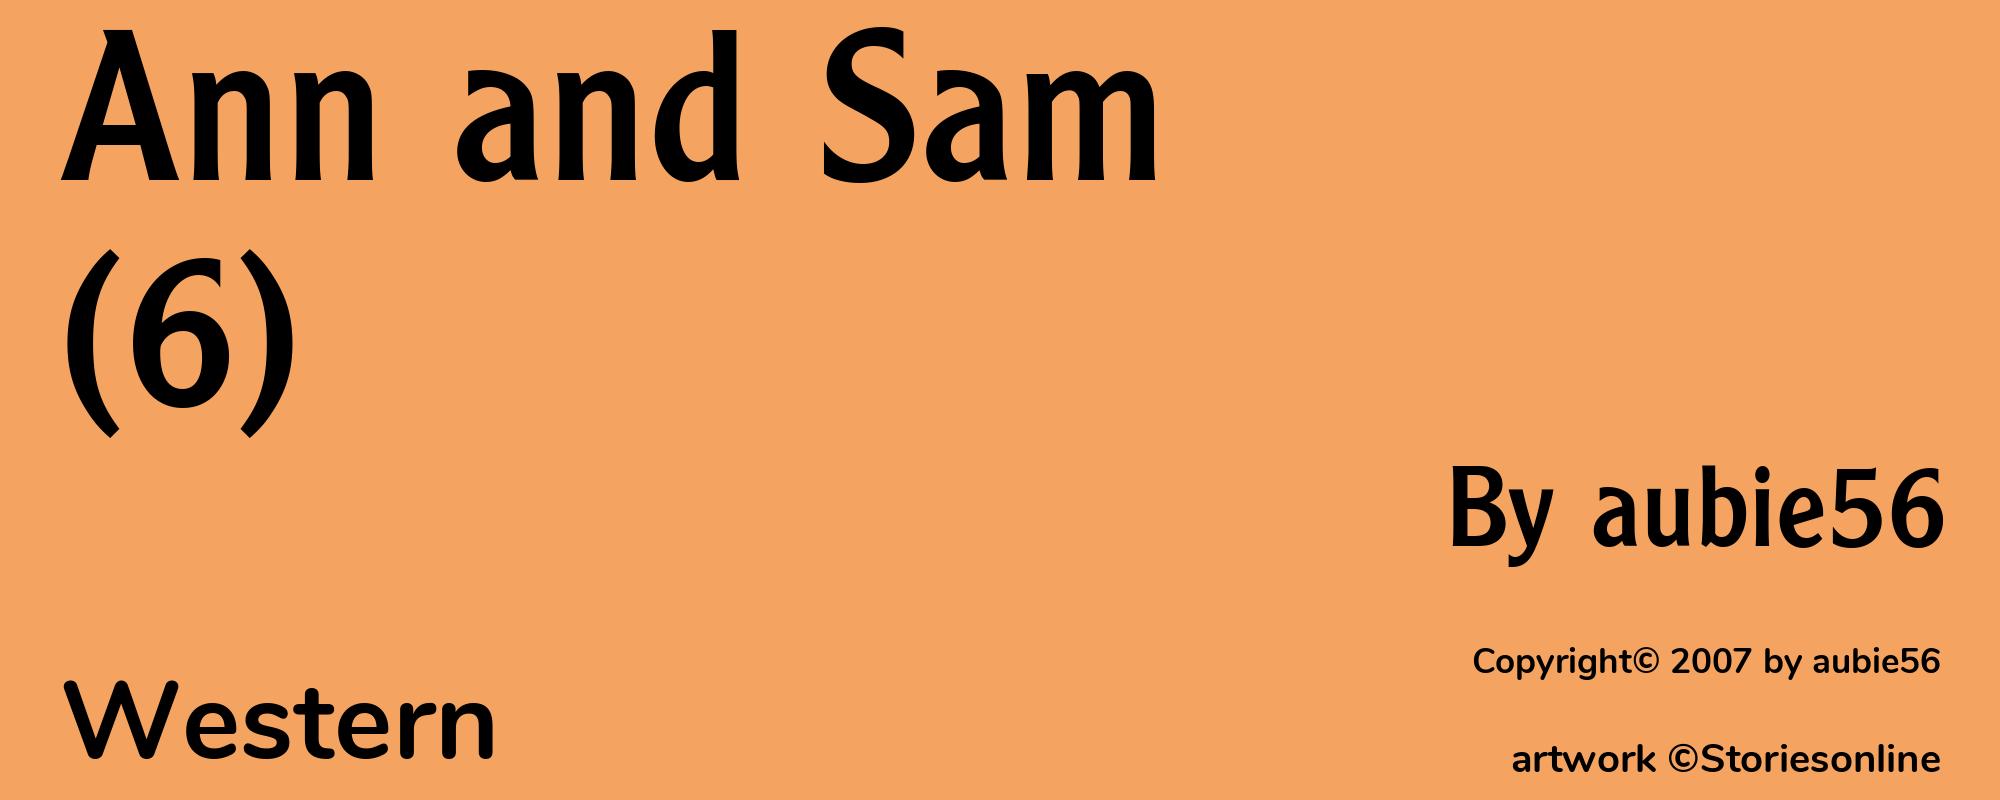 Ann and Sam(6) - Cover